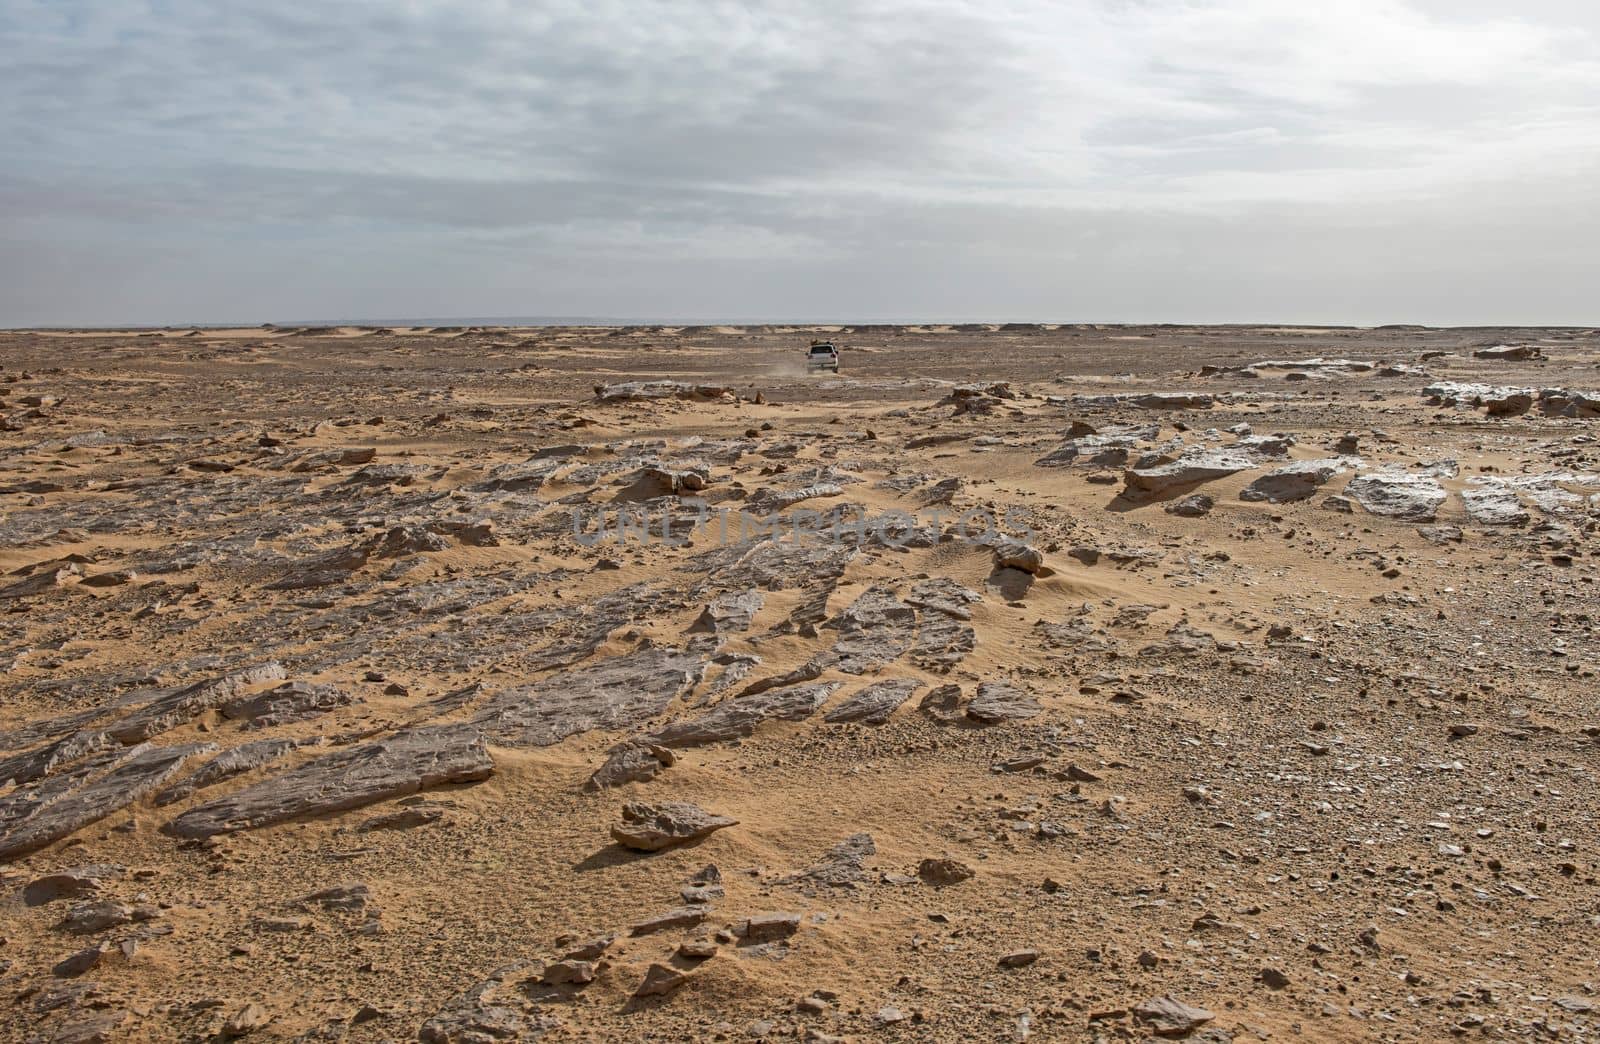 Barren desert landscape in hot climate with off-road vehicle by paulvinten